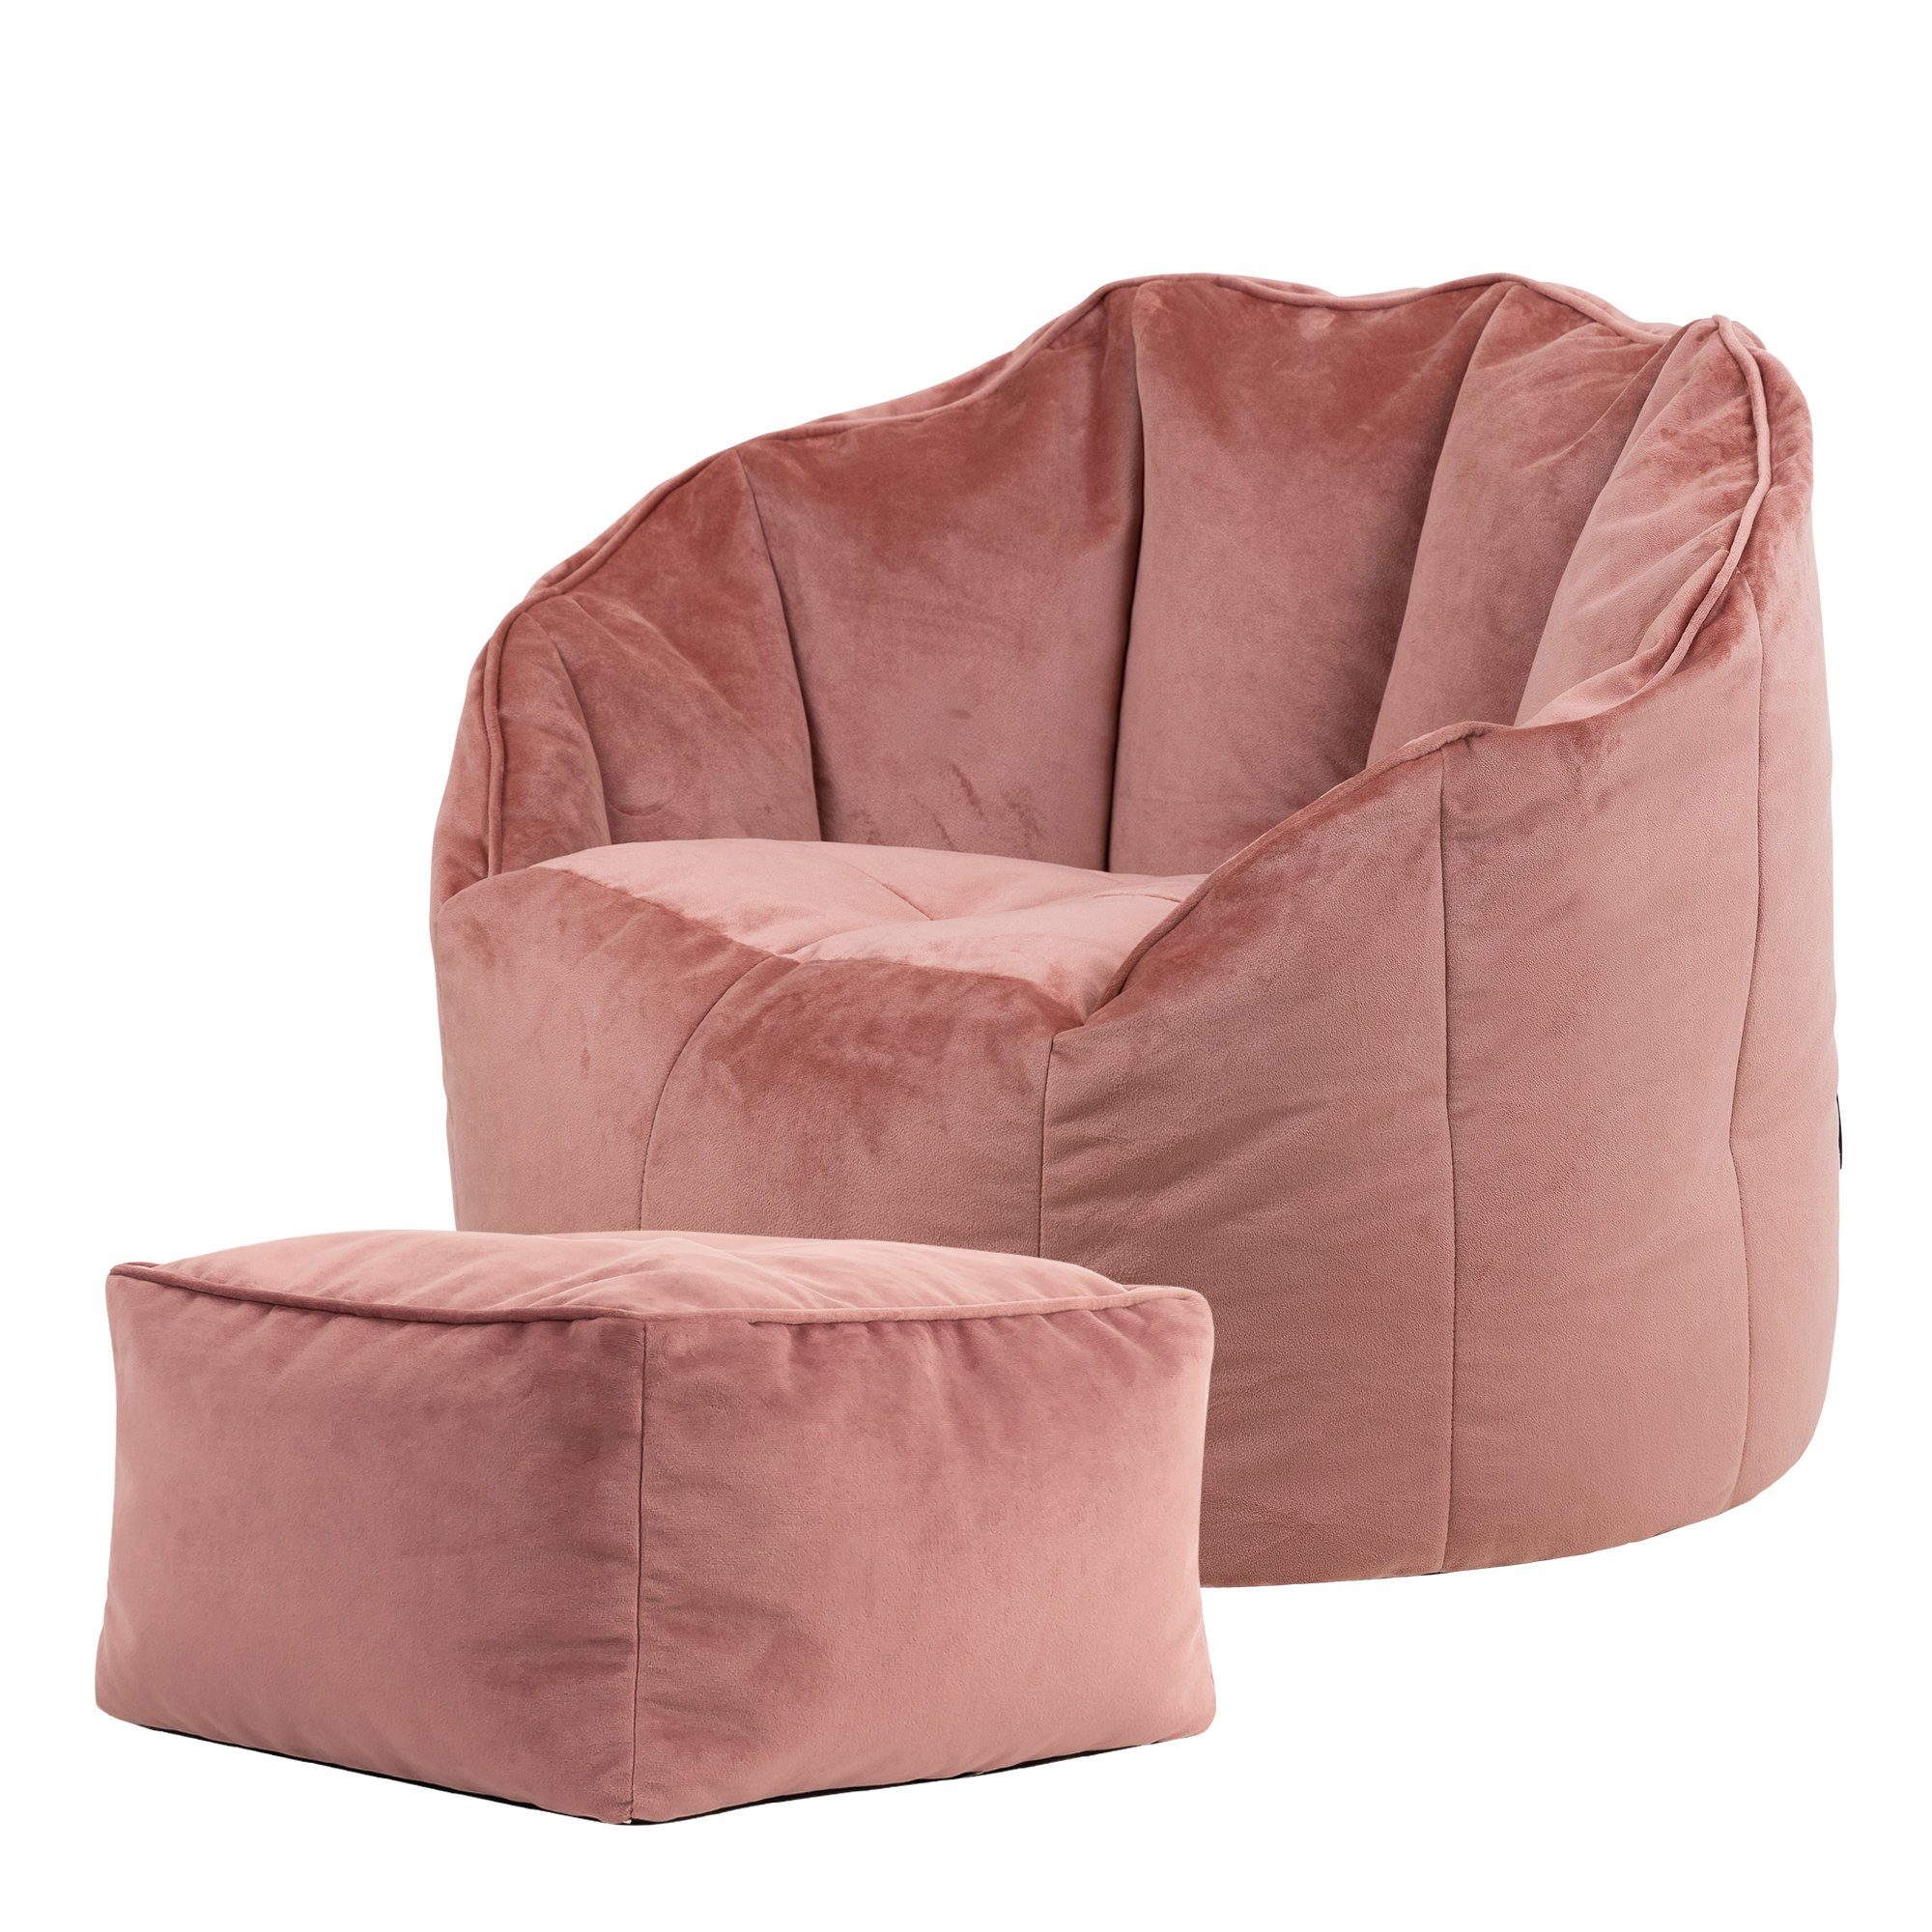 „Sirena“ Plüschsamt Sessel icon Sitzpouf Sitzsack aus Sitzsack mit rosa